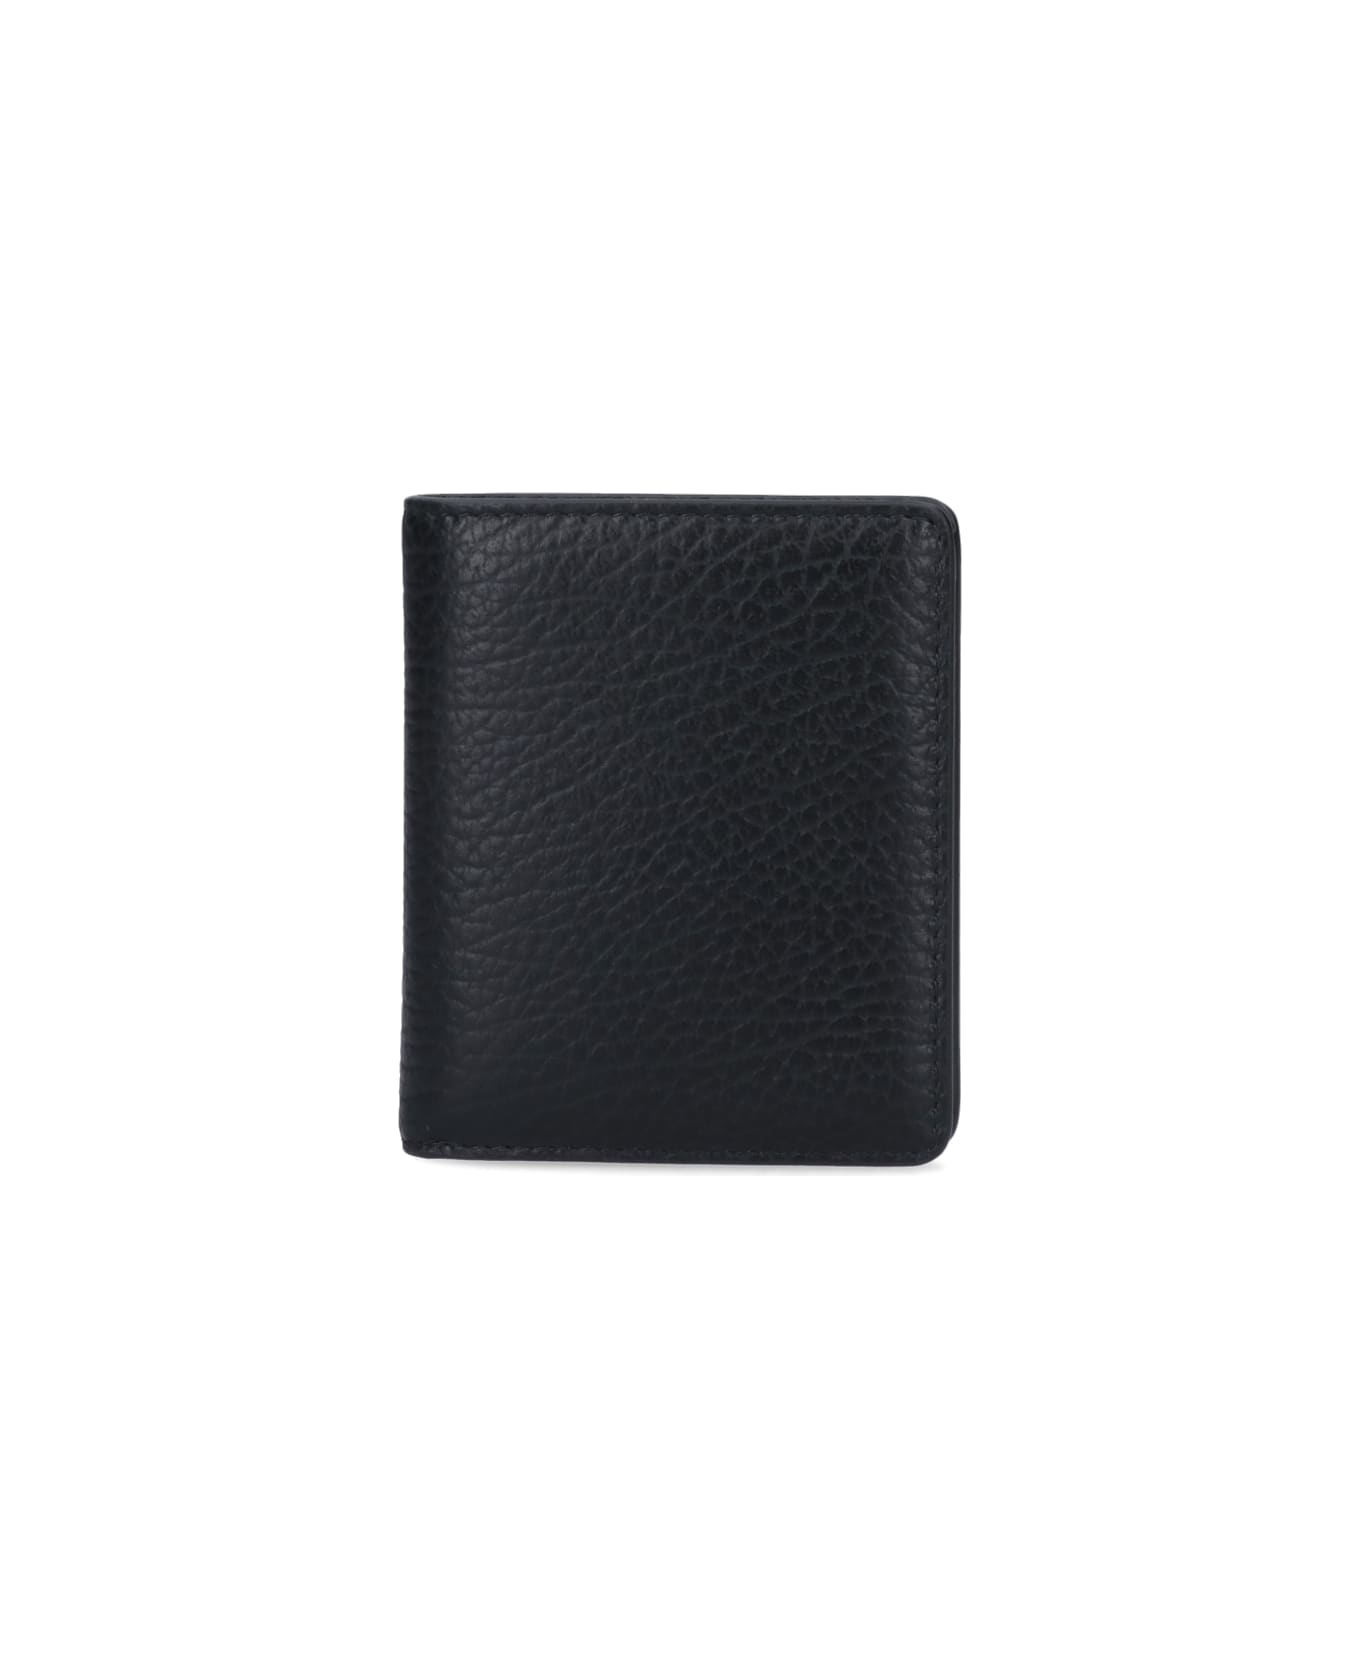 Maison Margiela 'stitching' Wallet - Black 財布